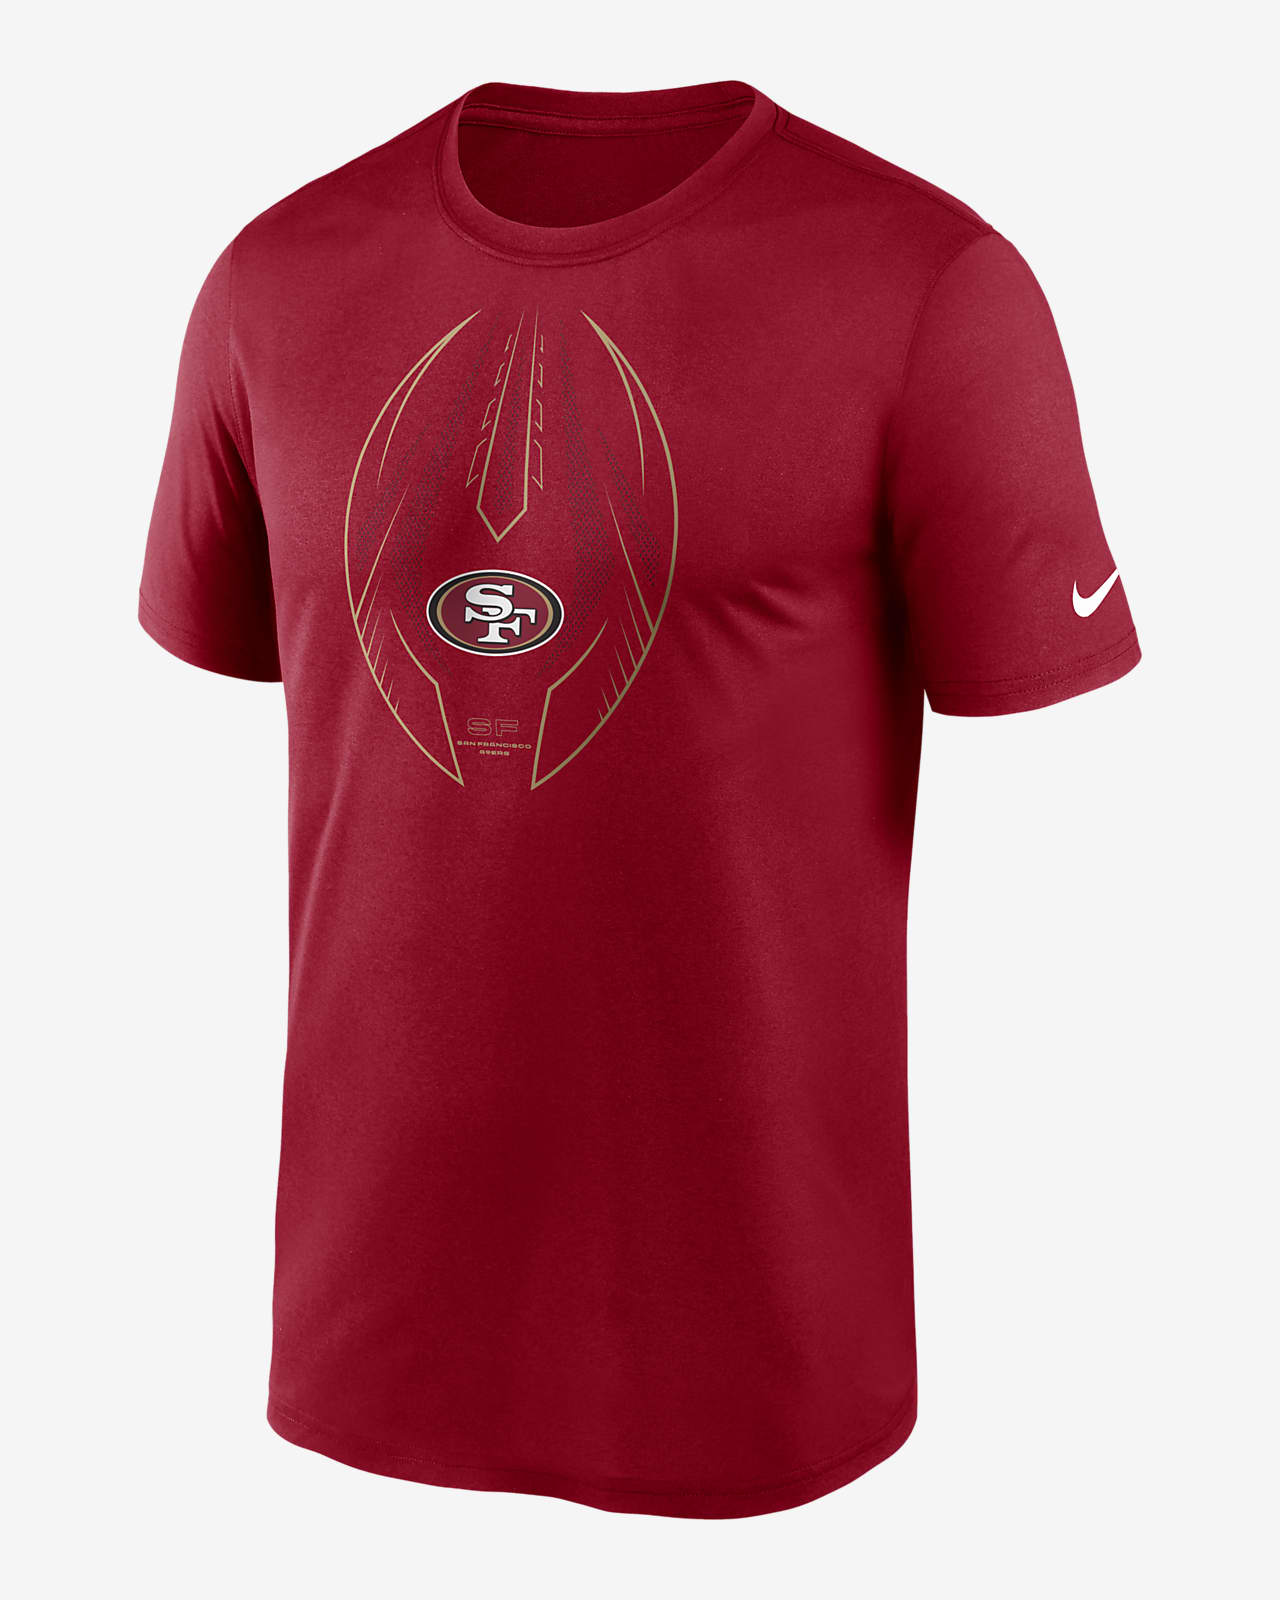  NFL Team Apparel SAN FRANCISCO 49ERS Football T-shirt Size 4 7 Years 